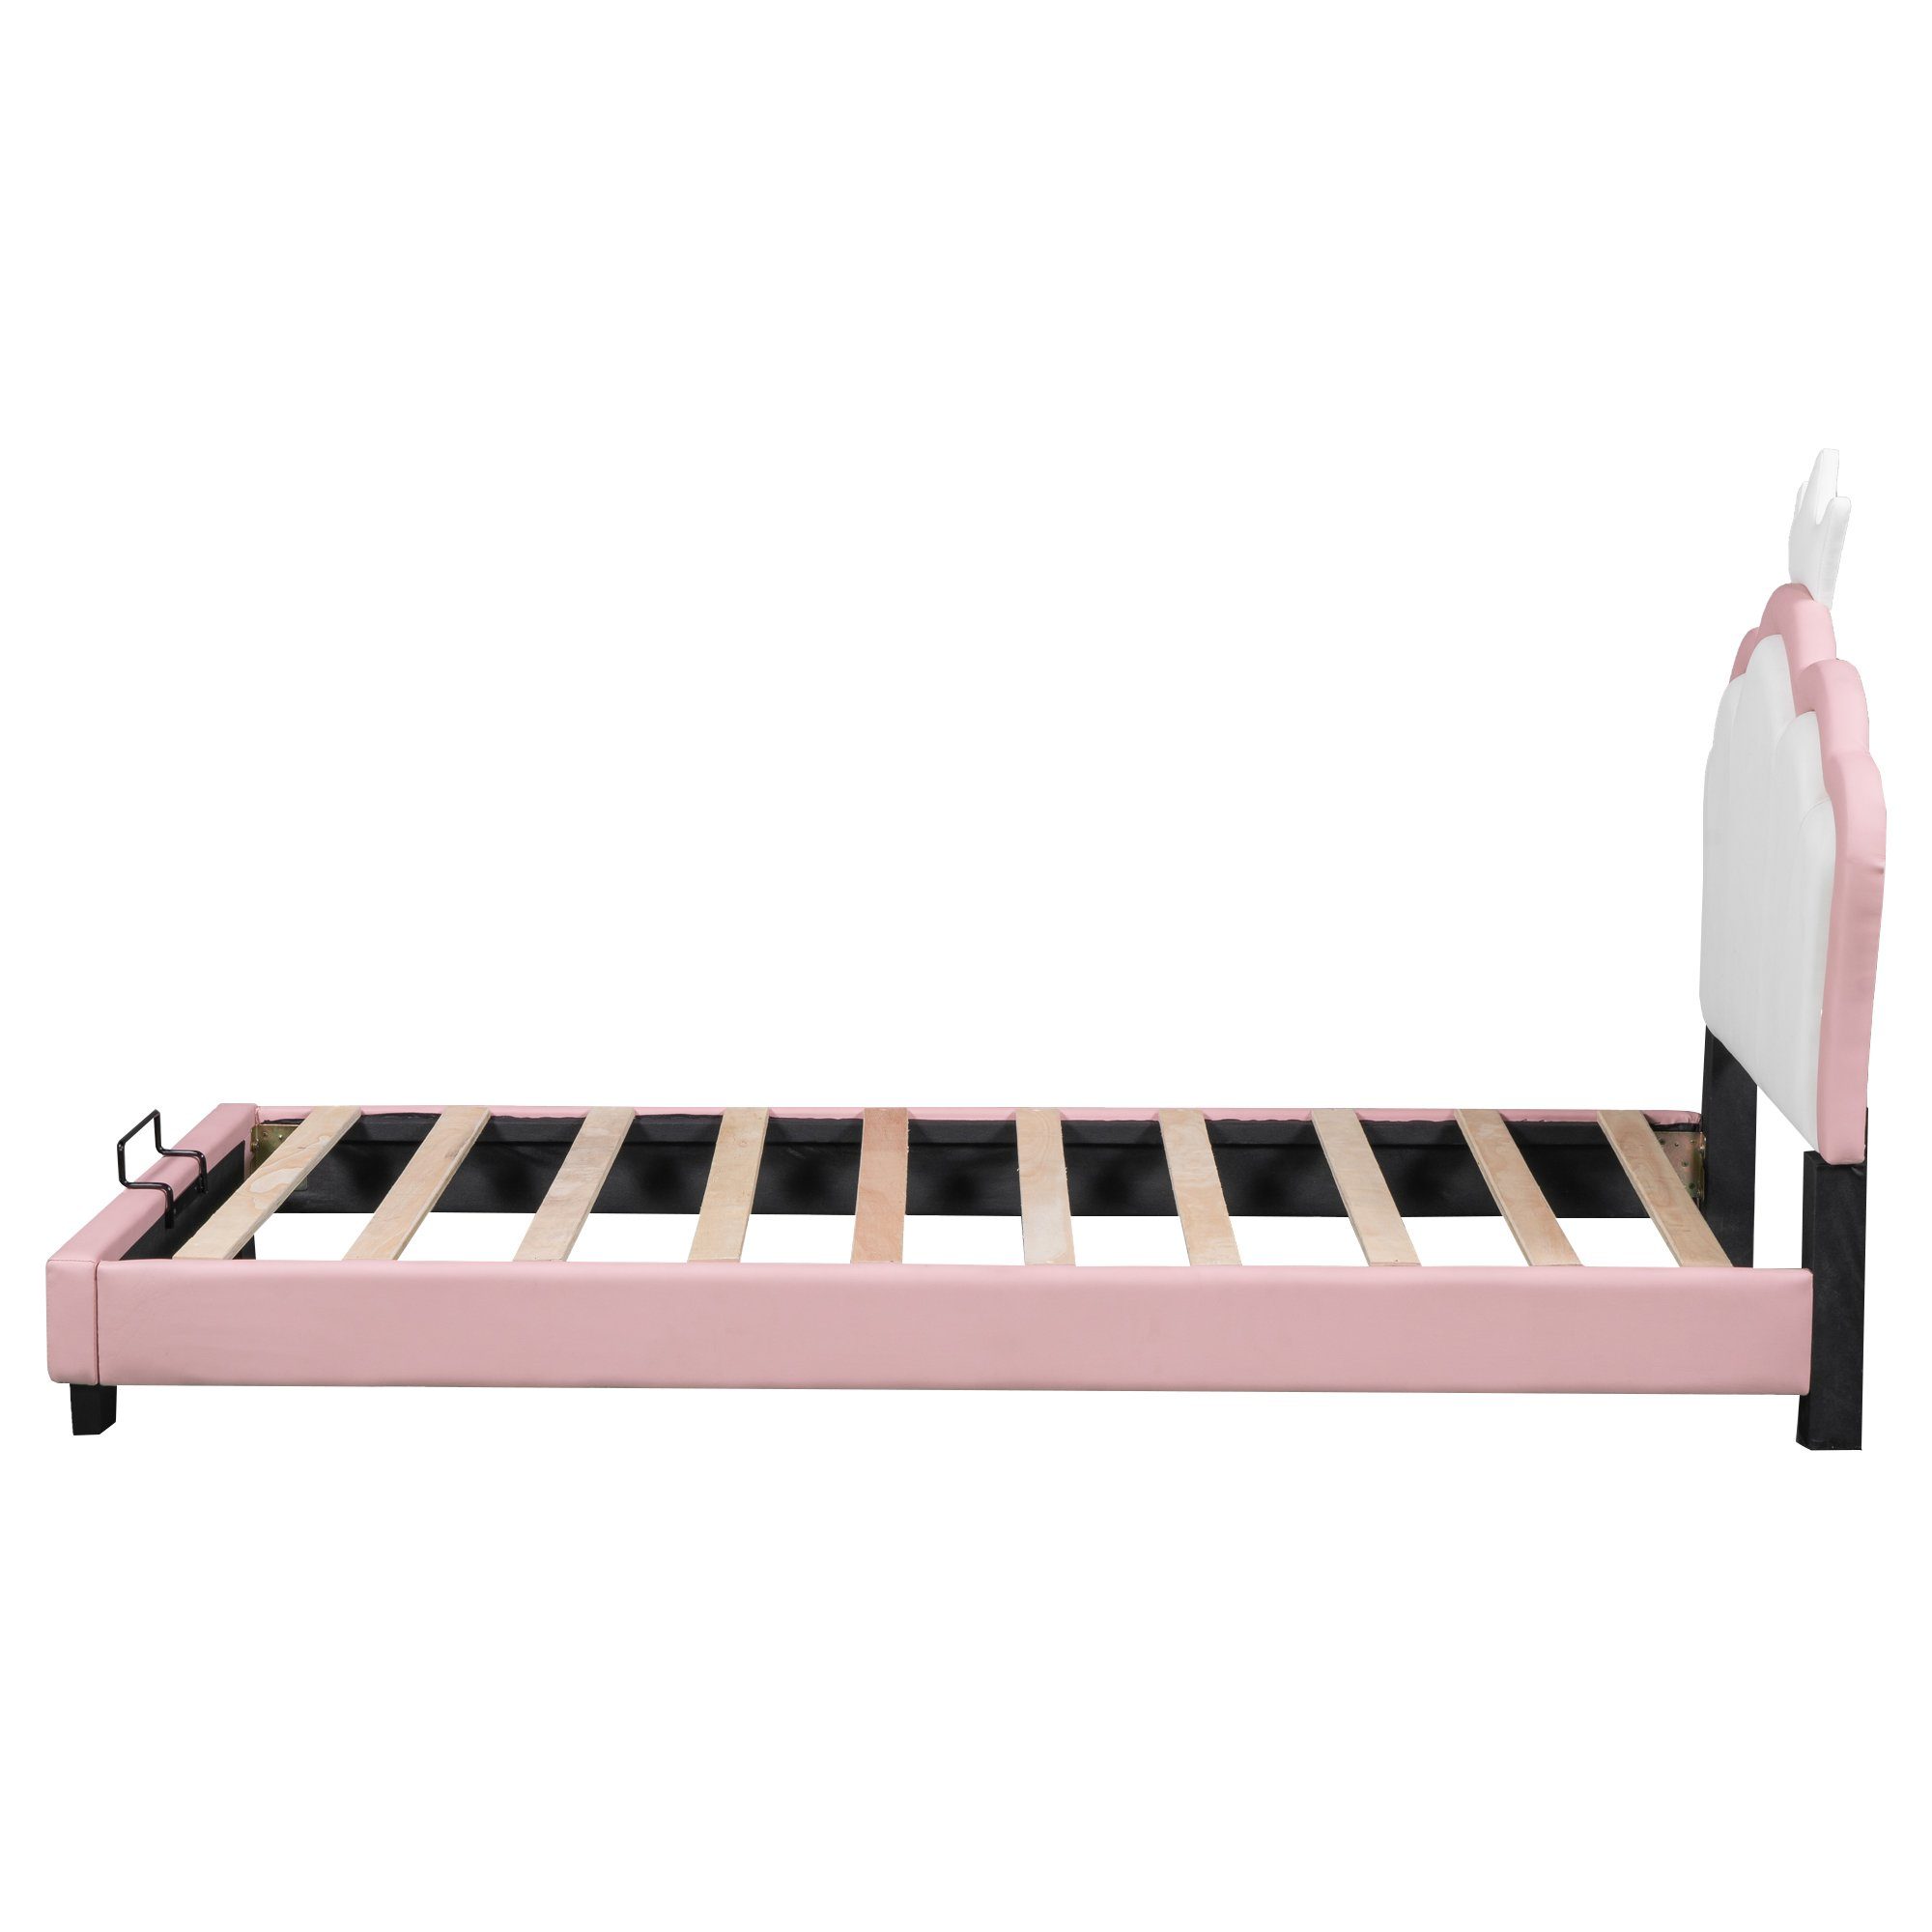 Flieks Polsterbett, Kinderbett rosa Kroneform 90x200cm Kunstleder mit Kopfteil